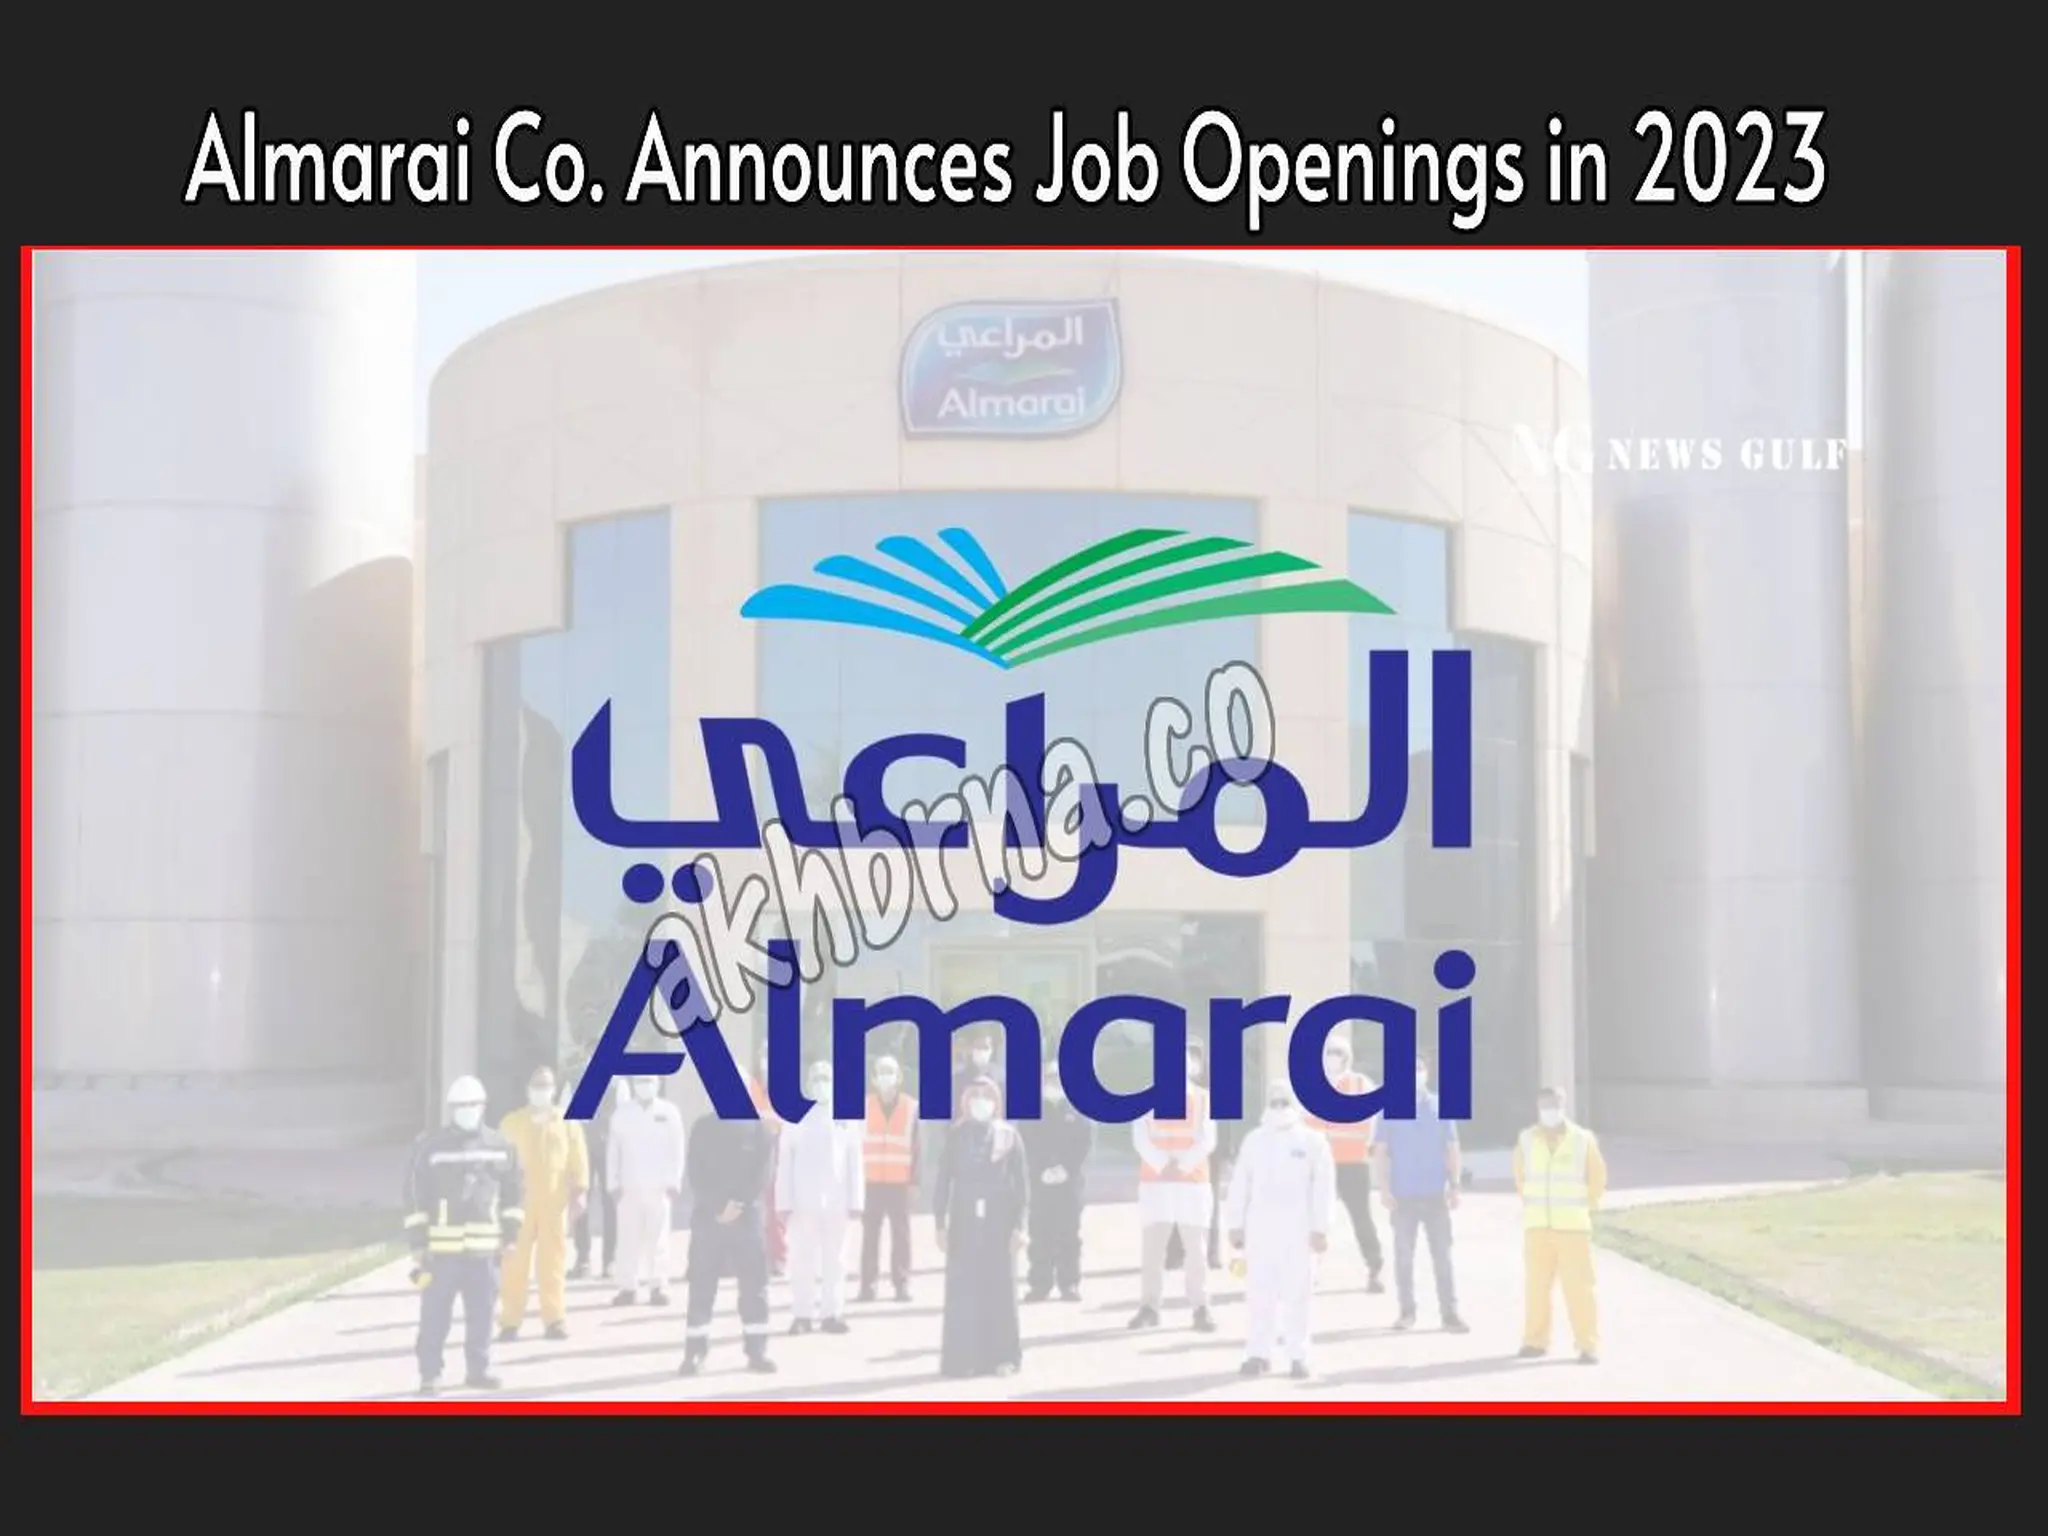 Almarai Co. Announces Job Openings in 2023 in Dubai, Abu Dhabi, and Sharjah